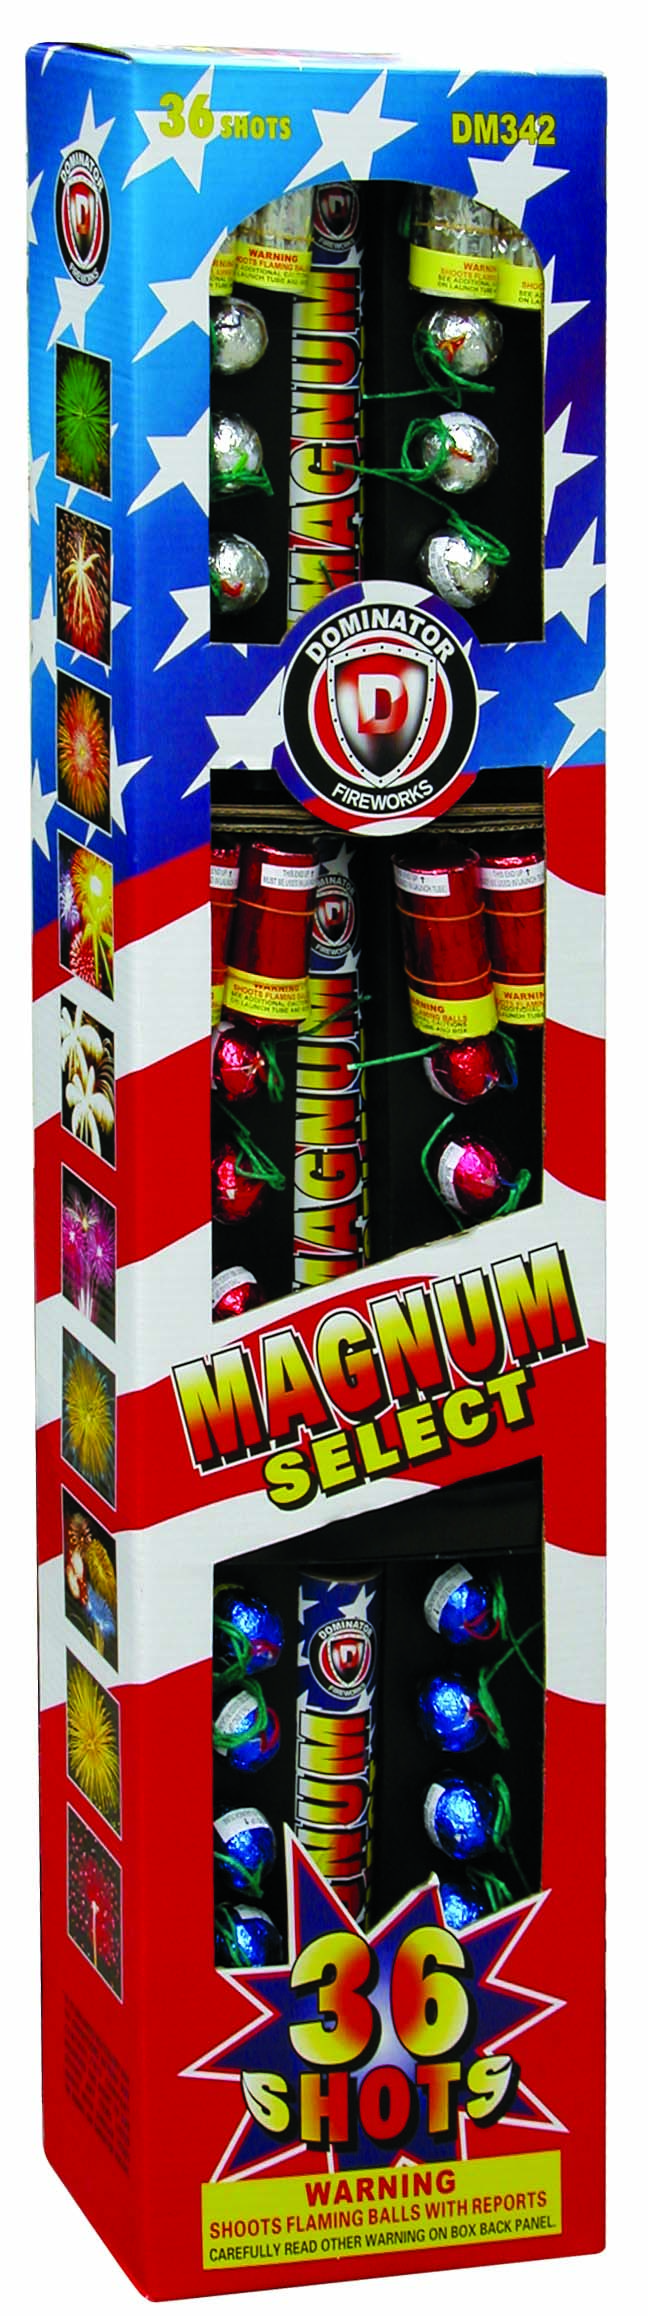 Dominator Magnum Select